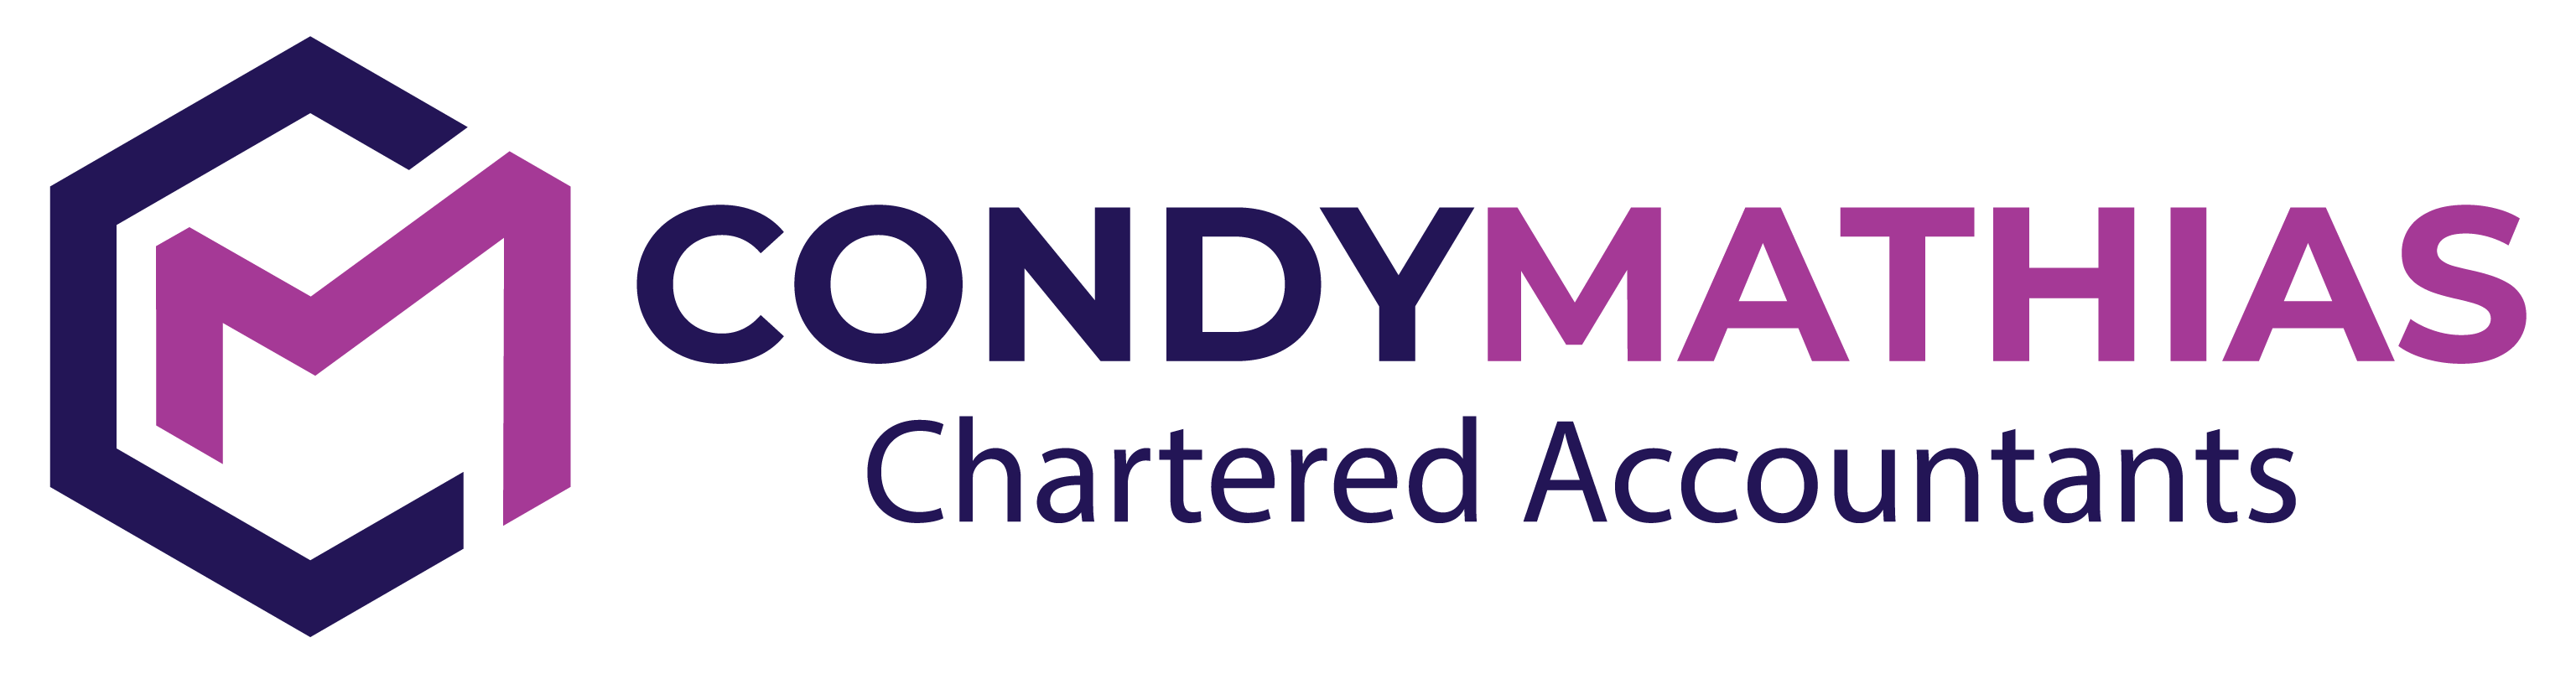 Condy Mathias Chartered Accountants Logo